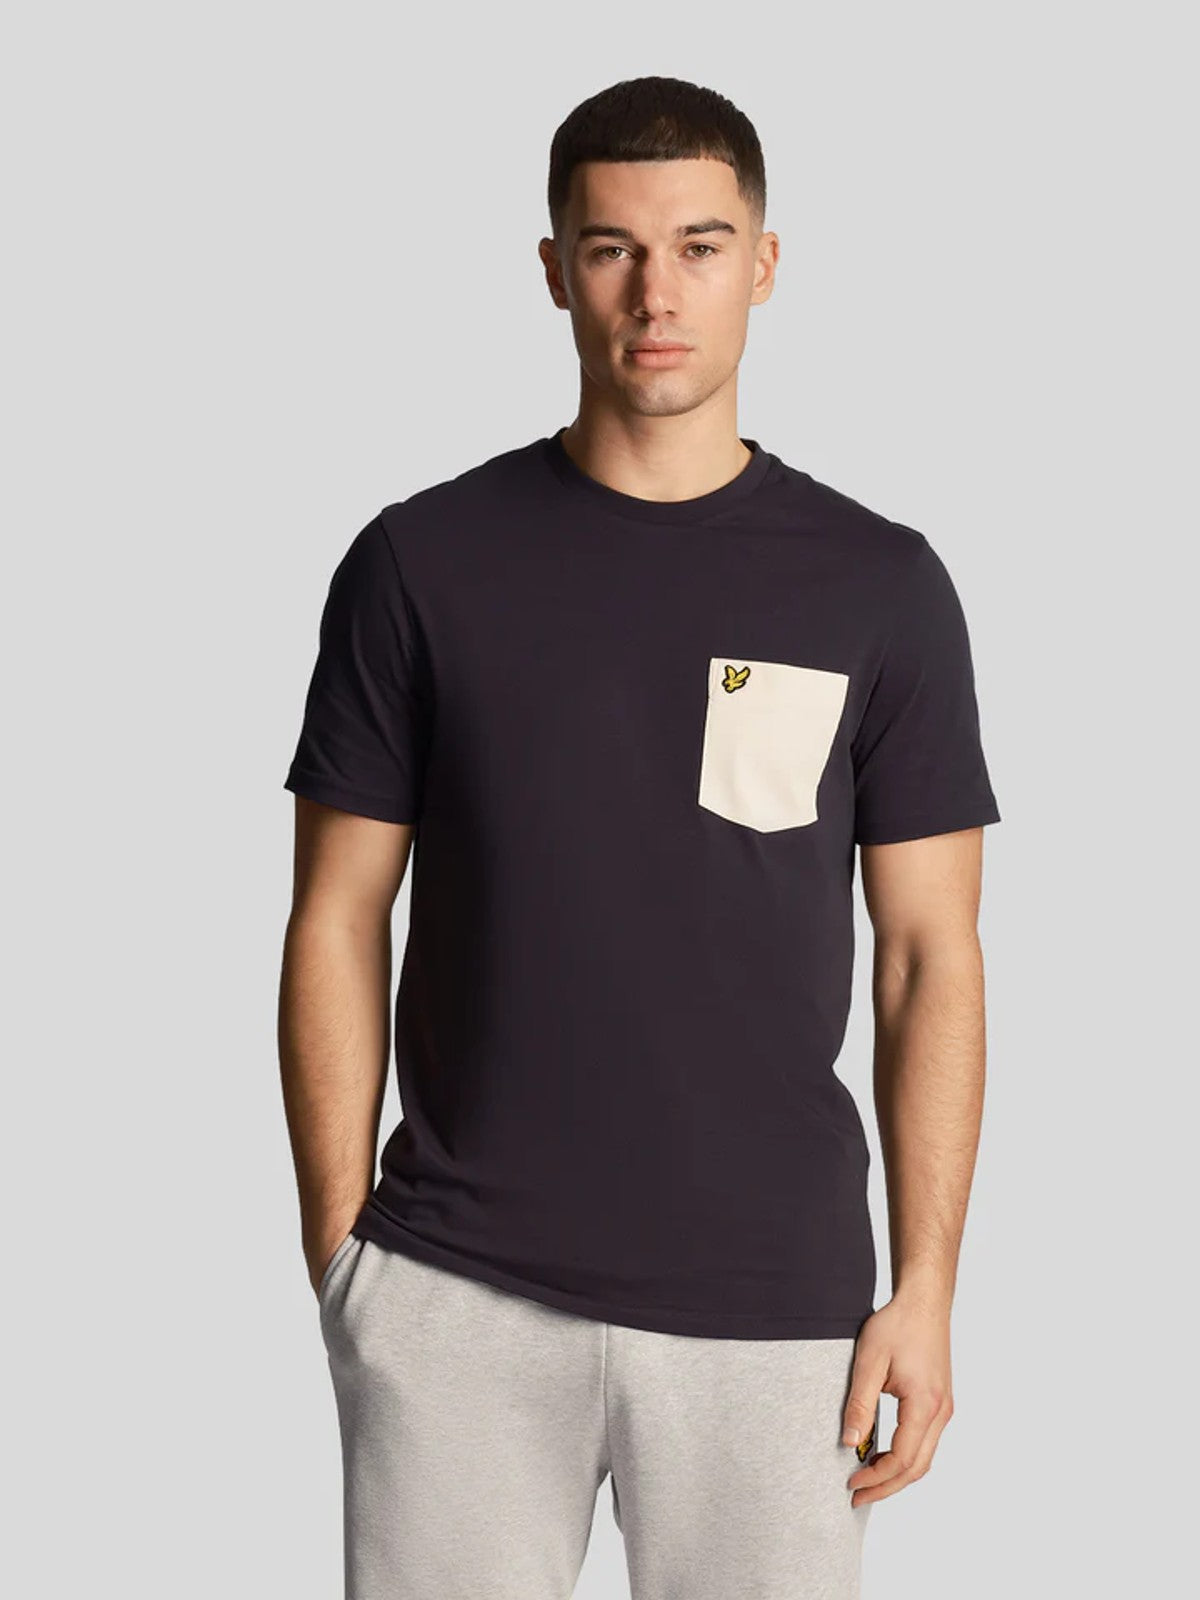 Contrast Pocket T-shirt